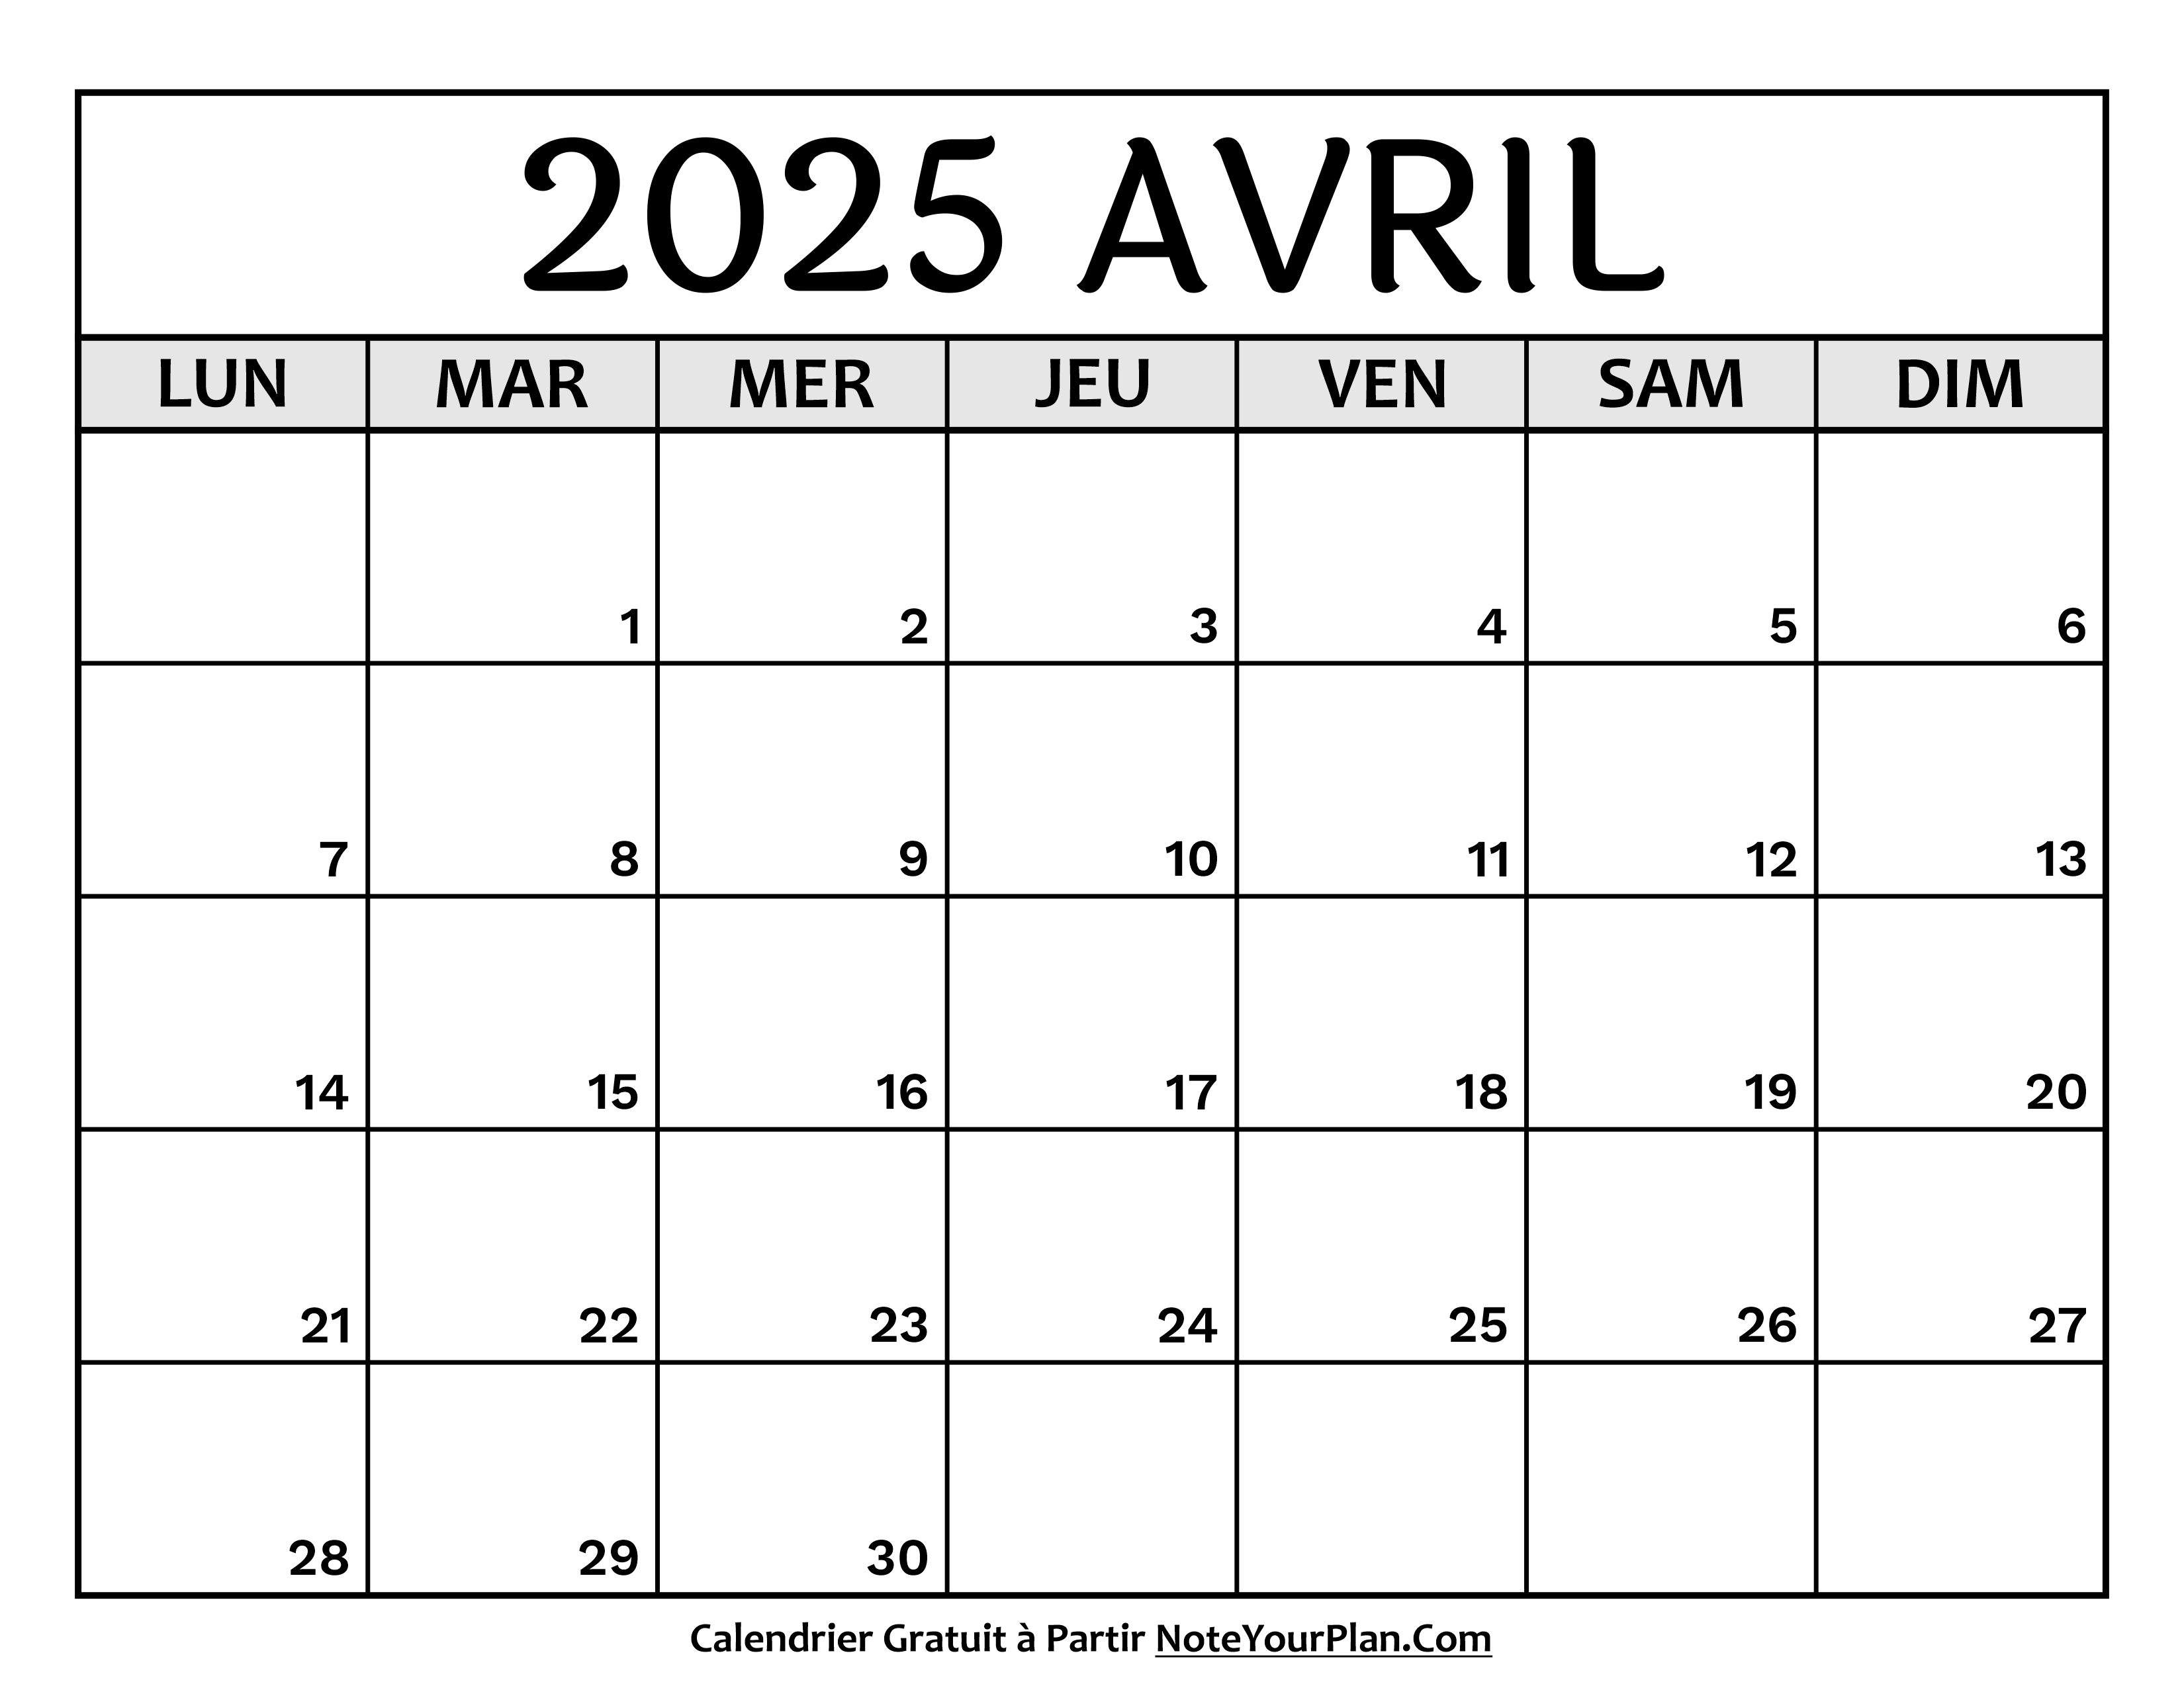 Calendrier Avril 2025 à Imprimer